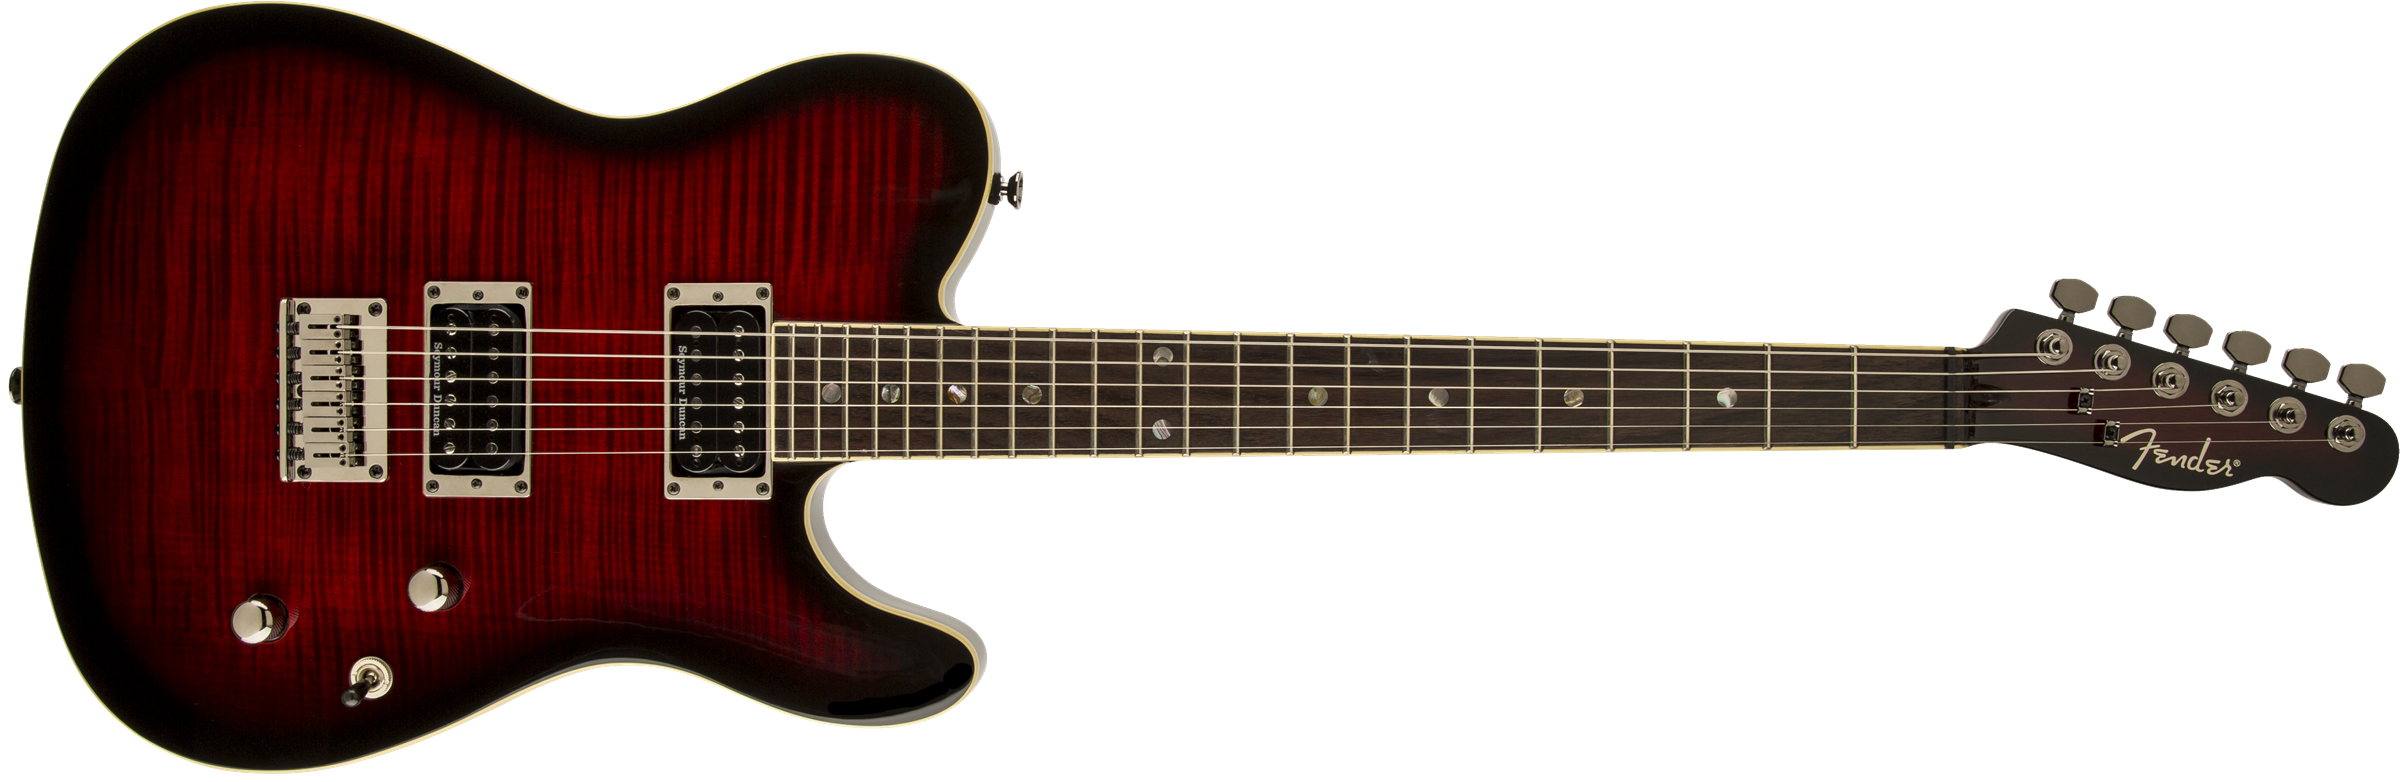 Fender Telecaster Korean Special Edition Custom Fmt (lau) - Black Cherry Burst - Televorm elektrische gitaar - Variation 1